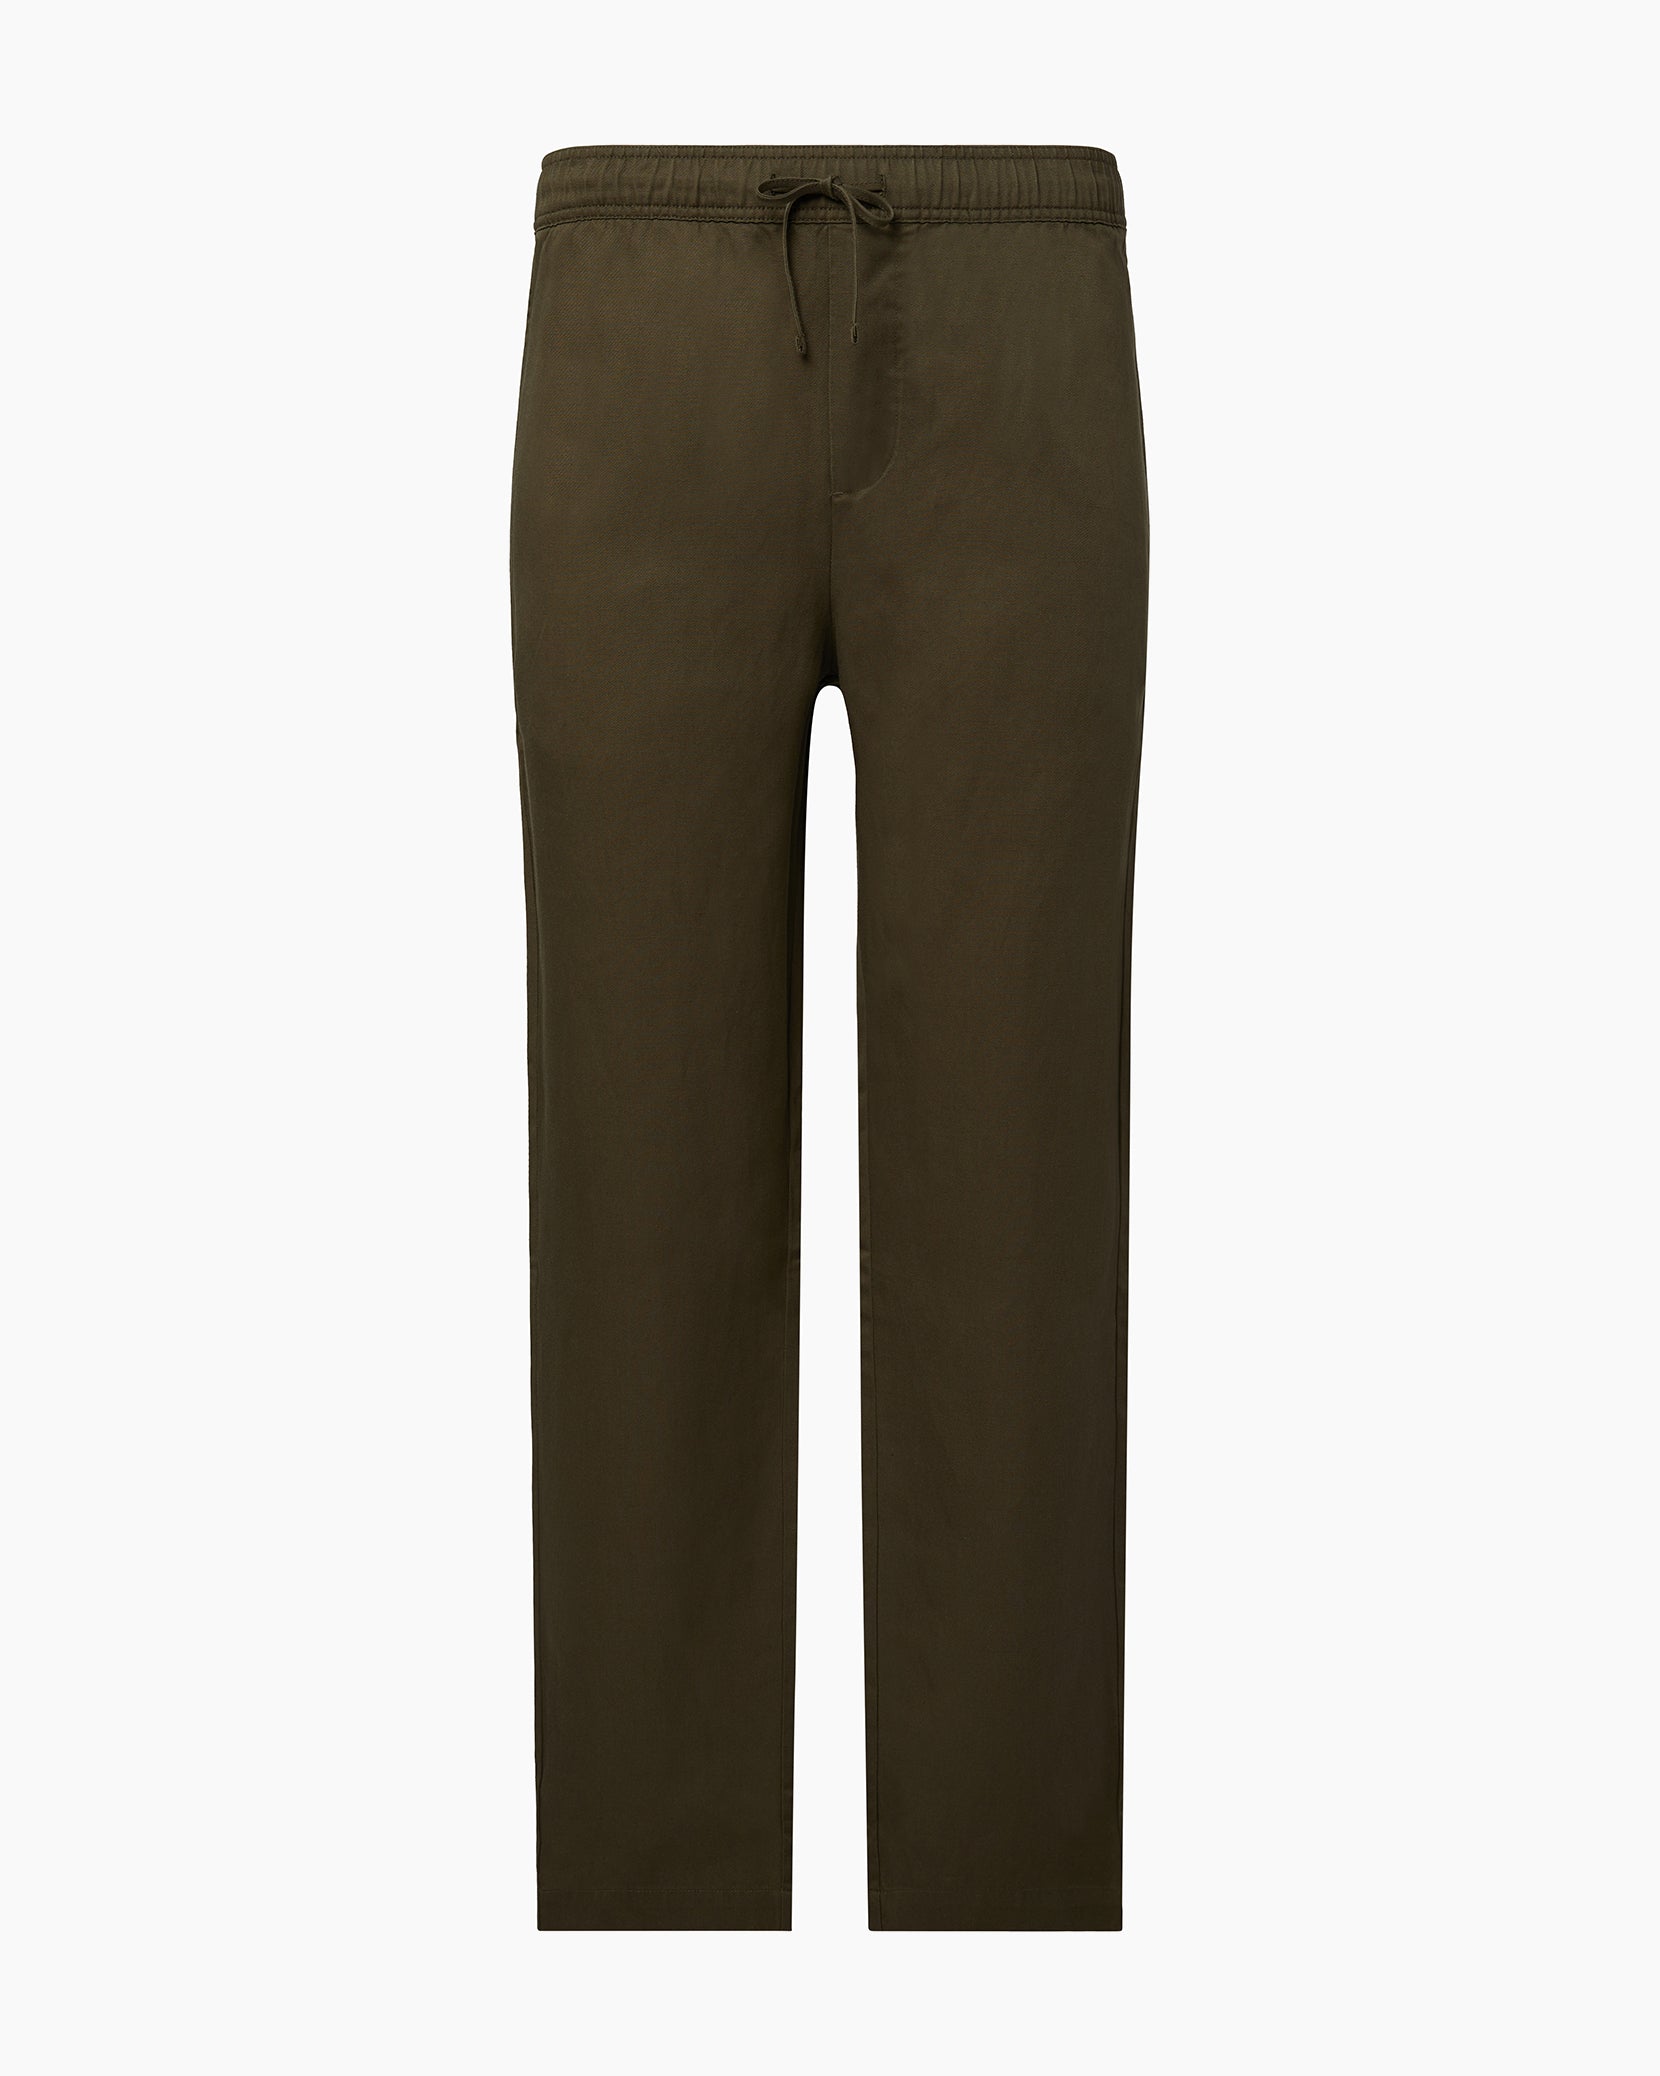 ZEROYAA Mens Night Club Metallic Gold Suit Pants/Straight Leg Trousers (28,  Gold) at  Men's Clothing store